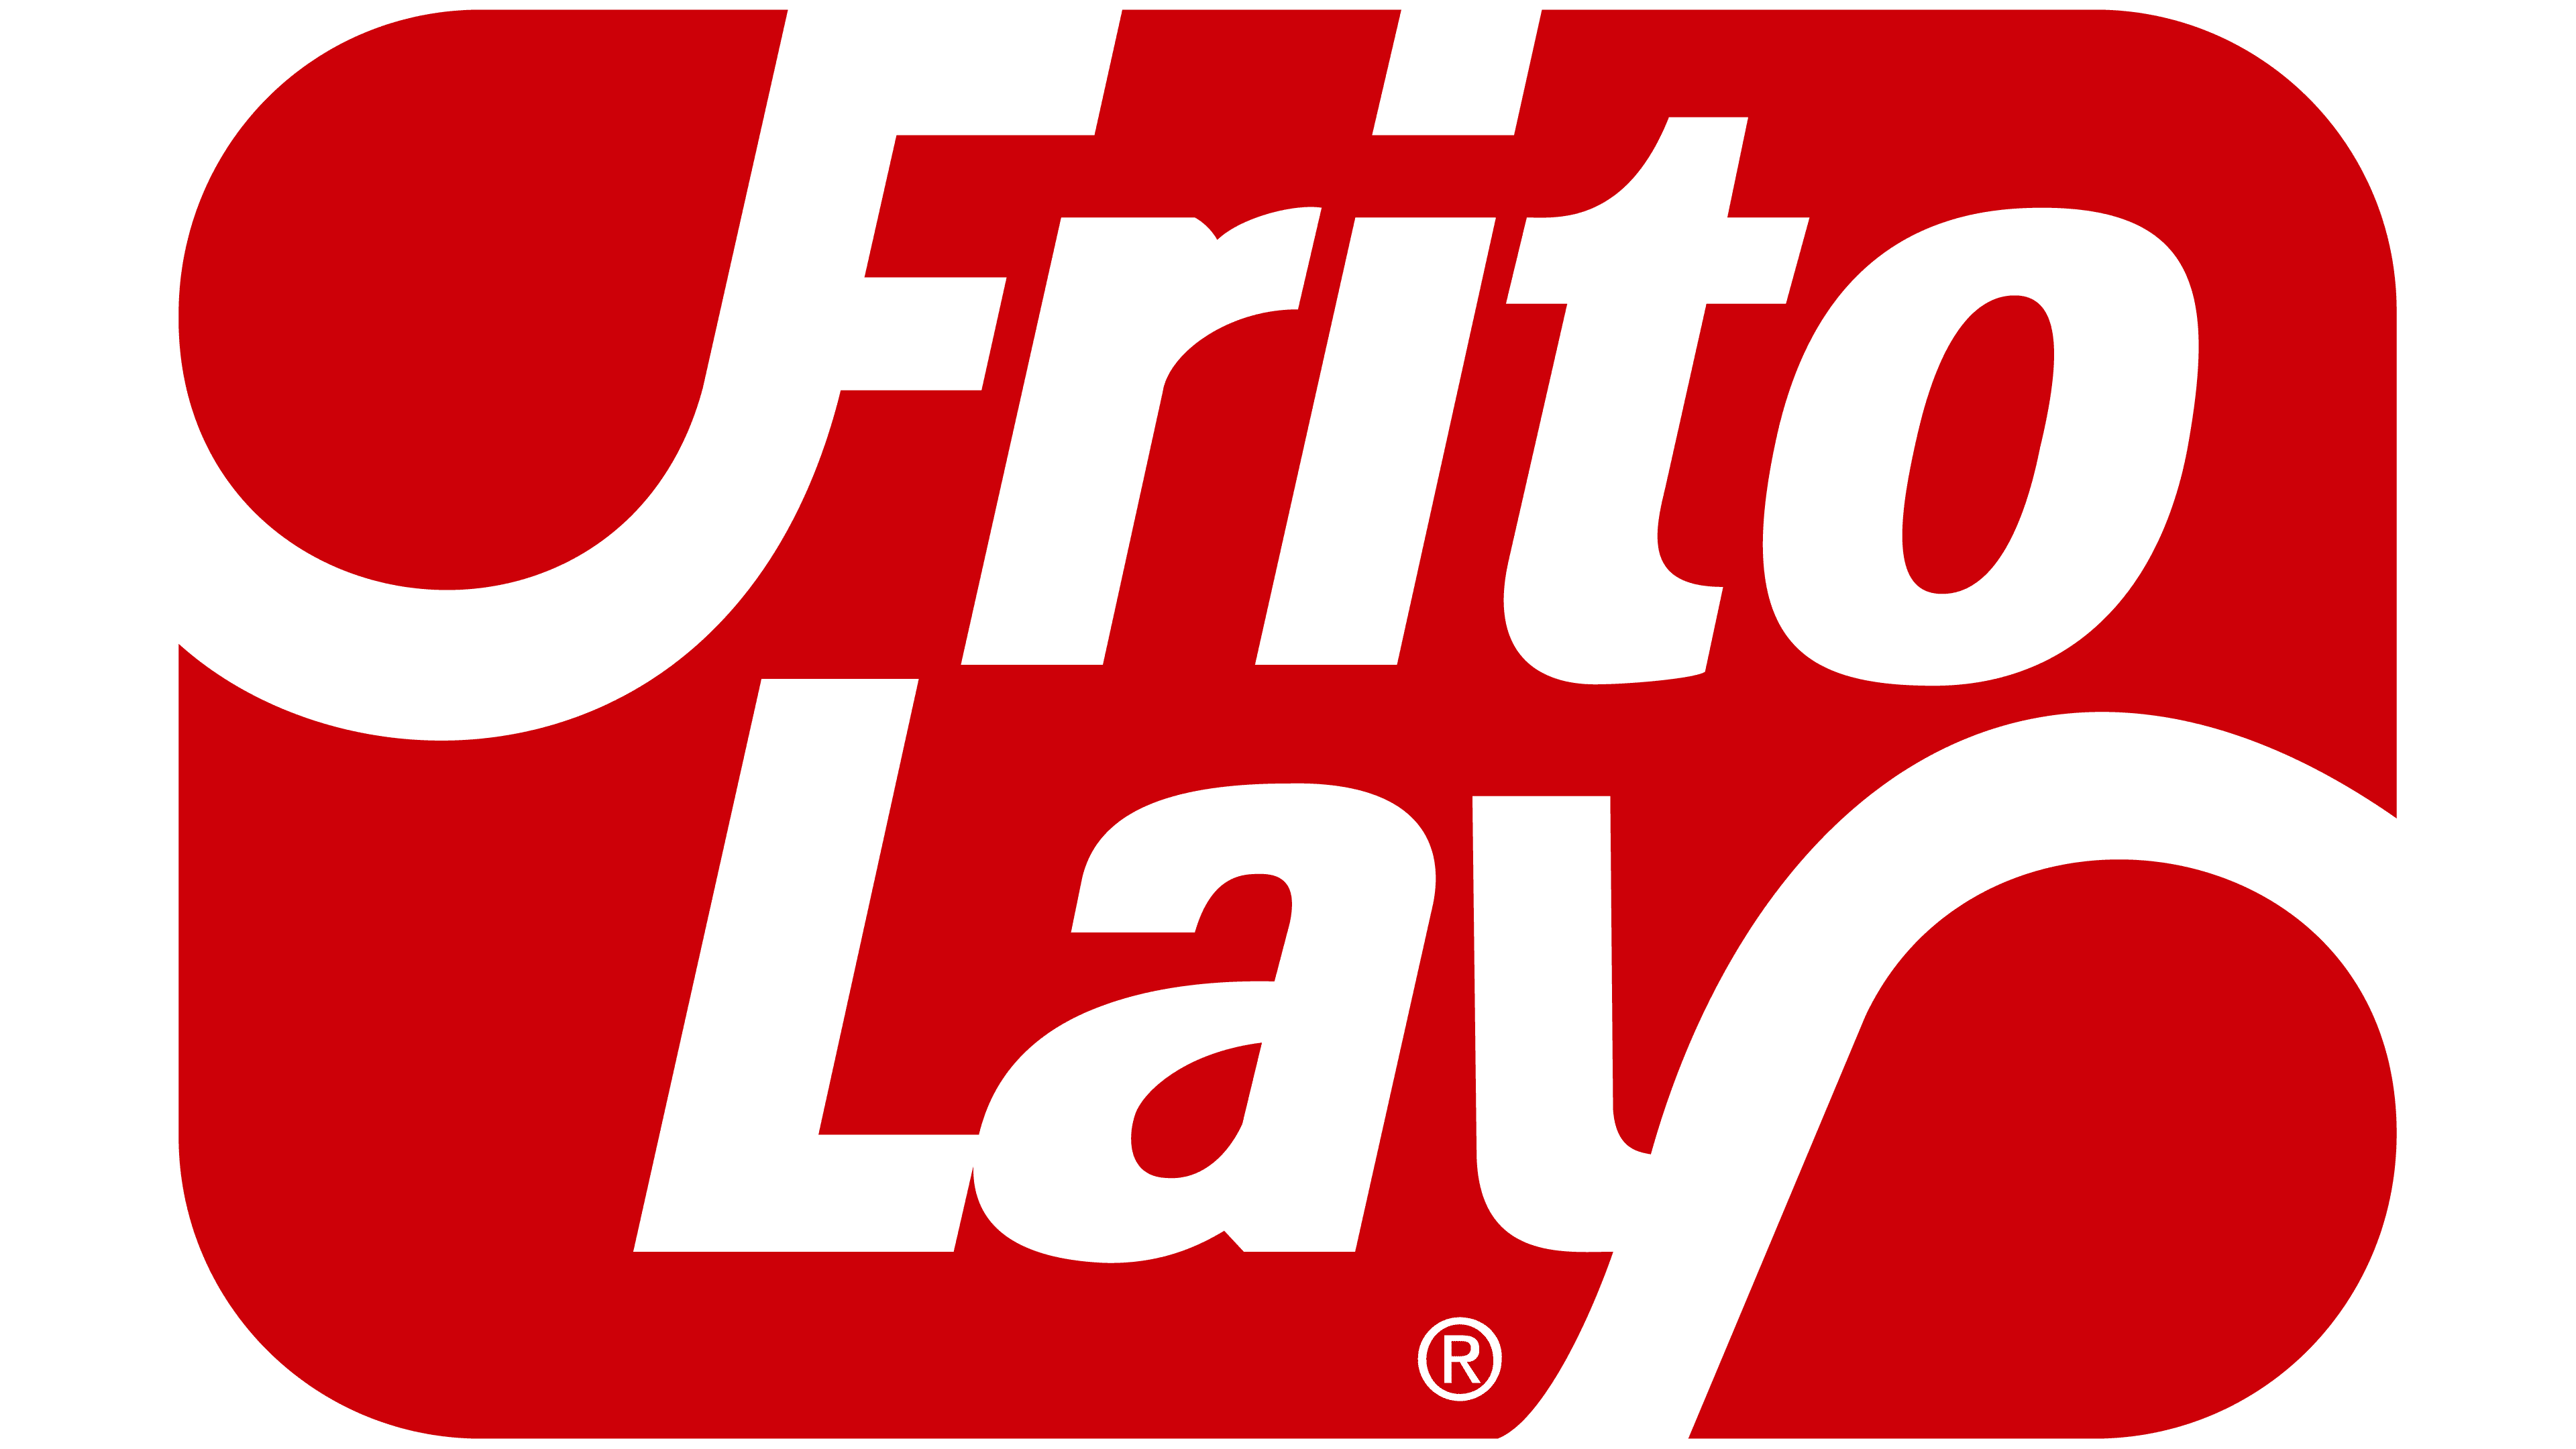 FritoLay logo and symbol, meaning, history, PNG